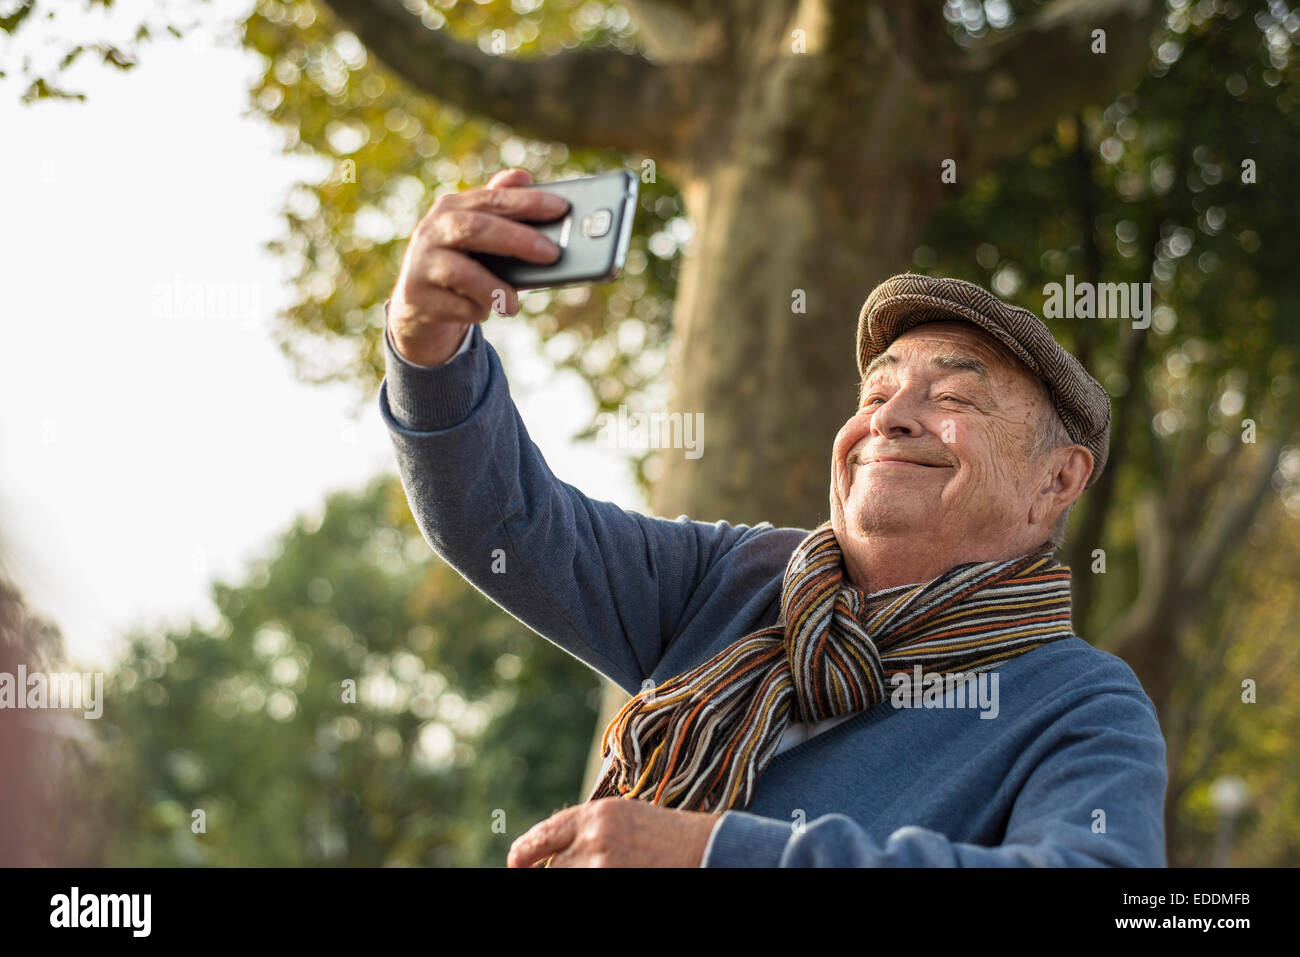 Smiling senior man taking a selfie Stock Photo